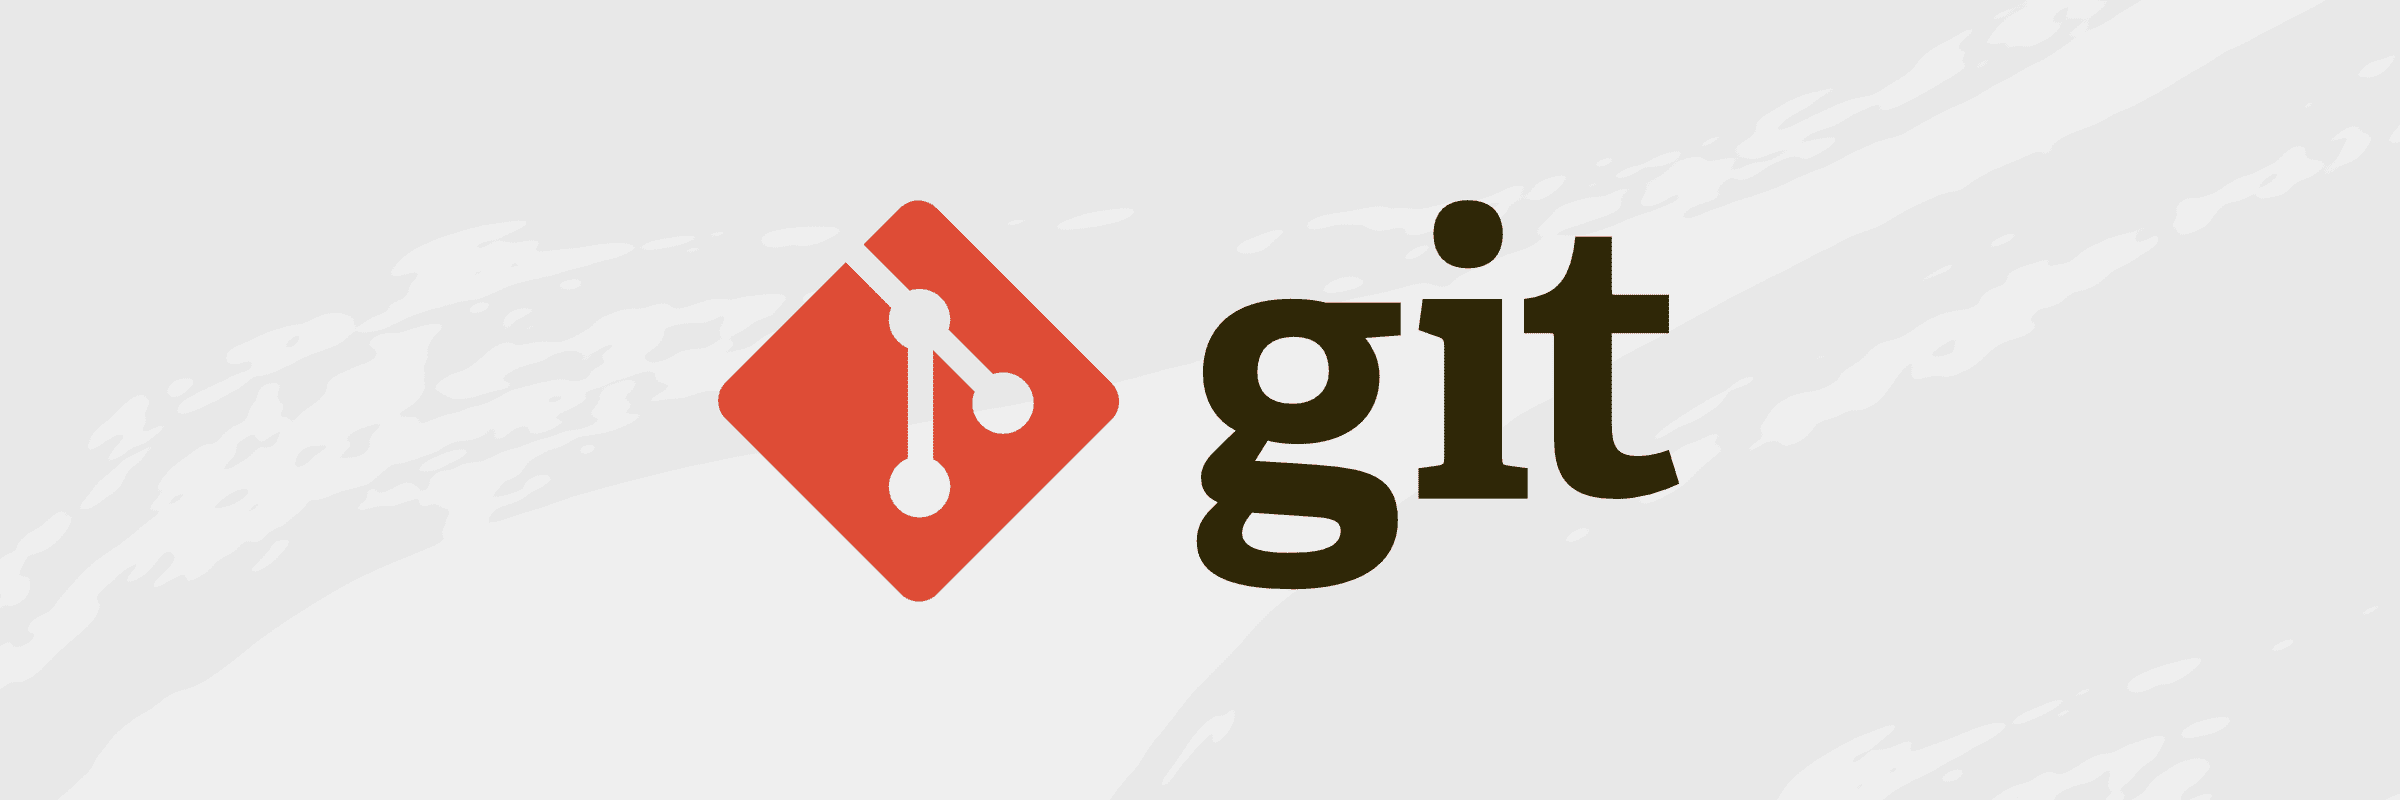 Https git io. Git игра. Git 1с.